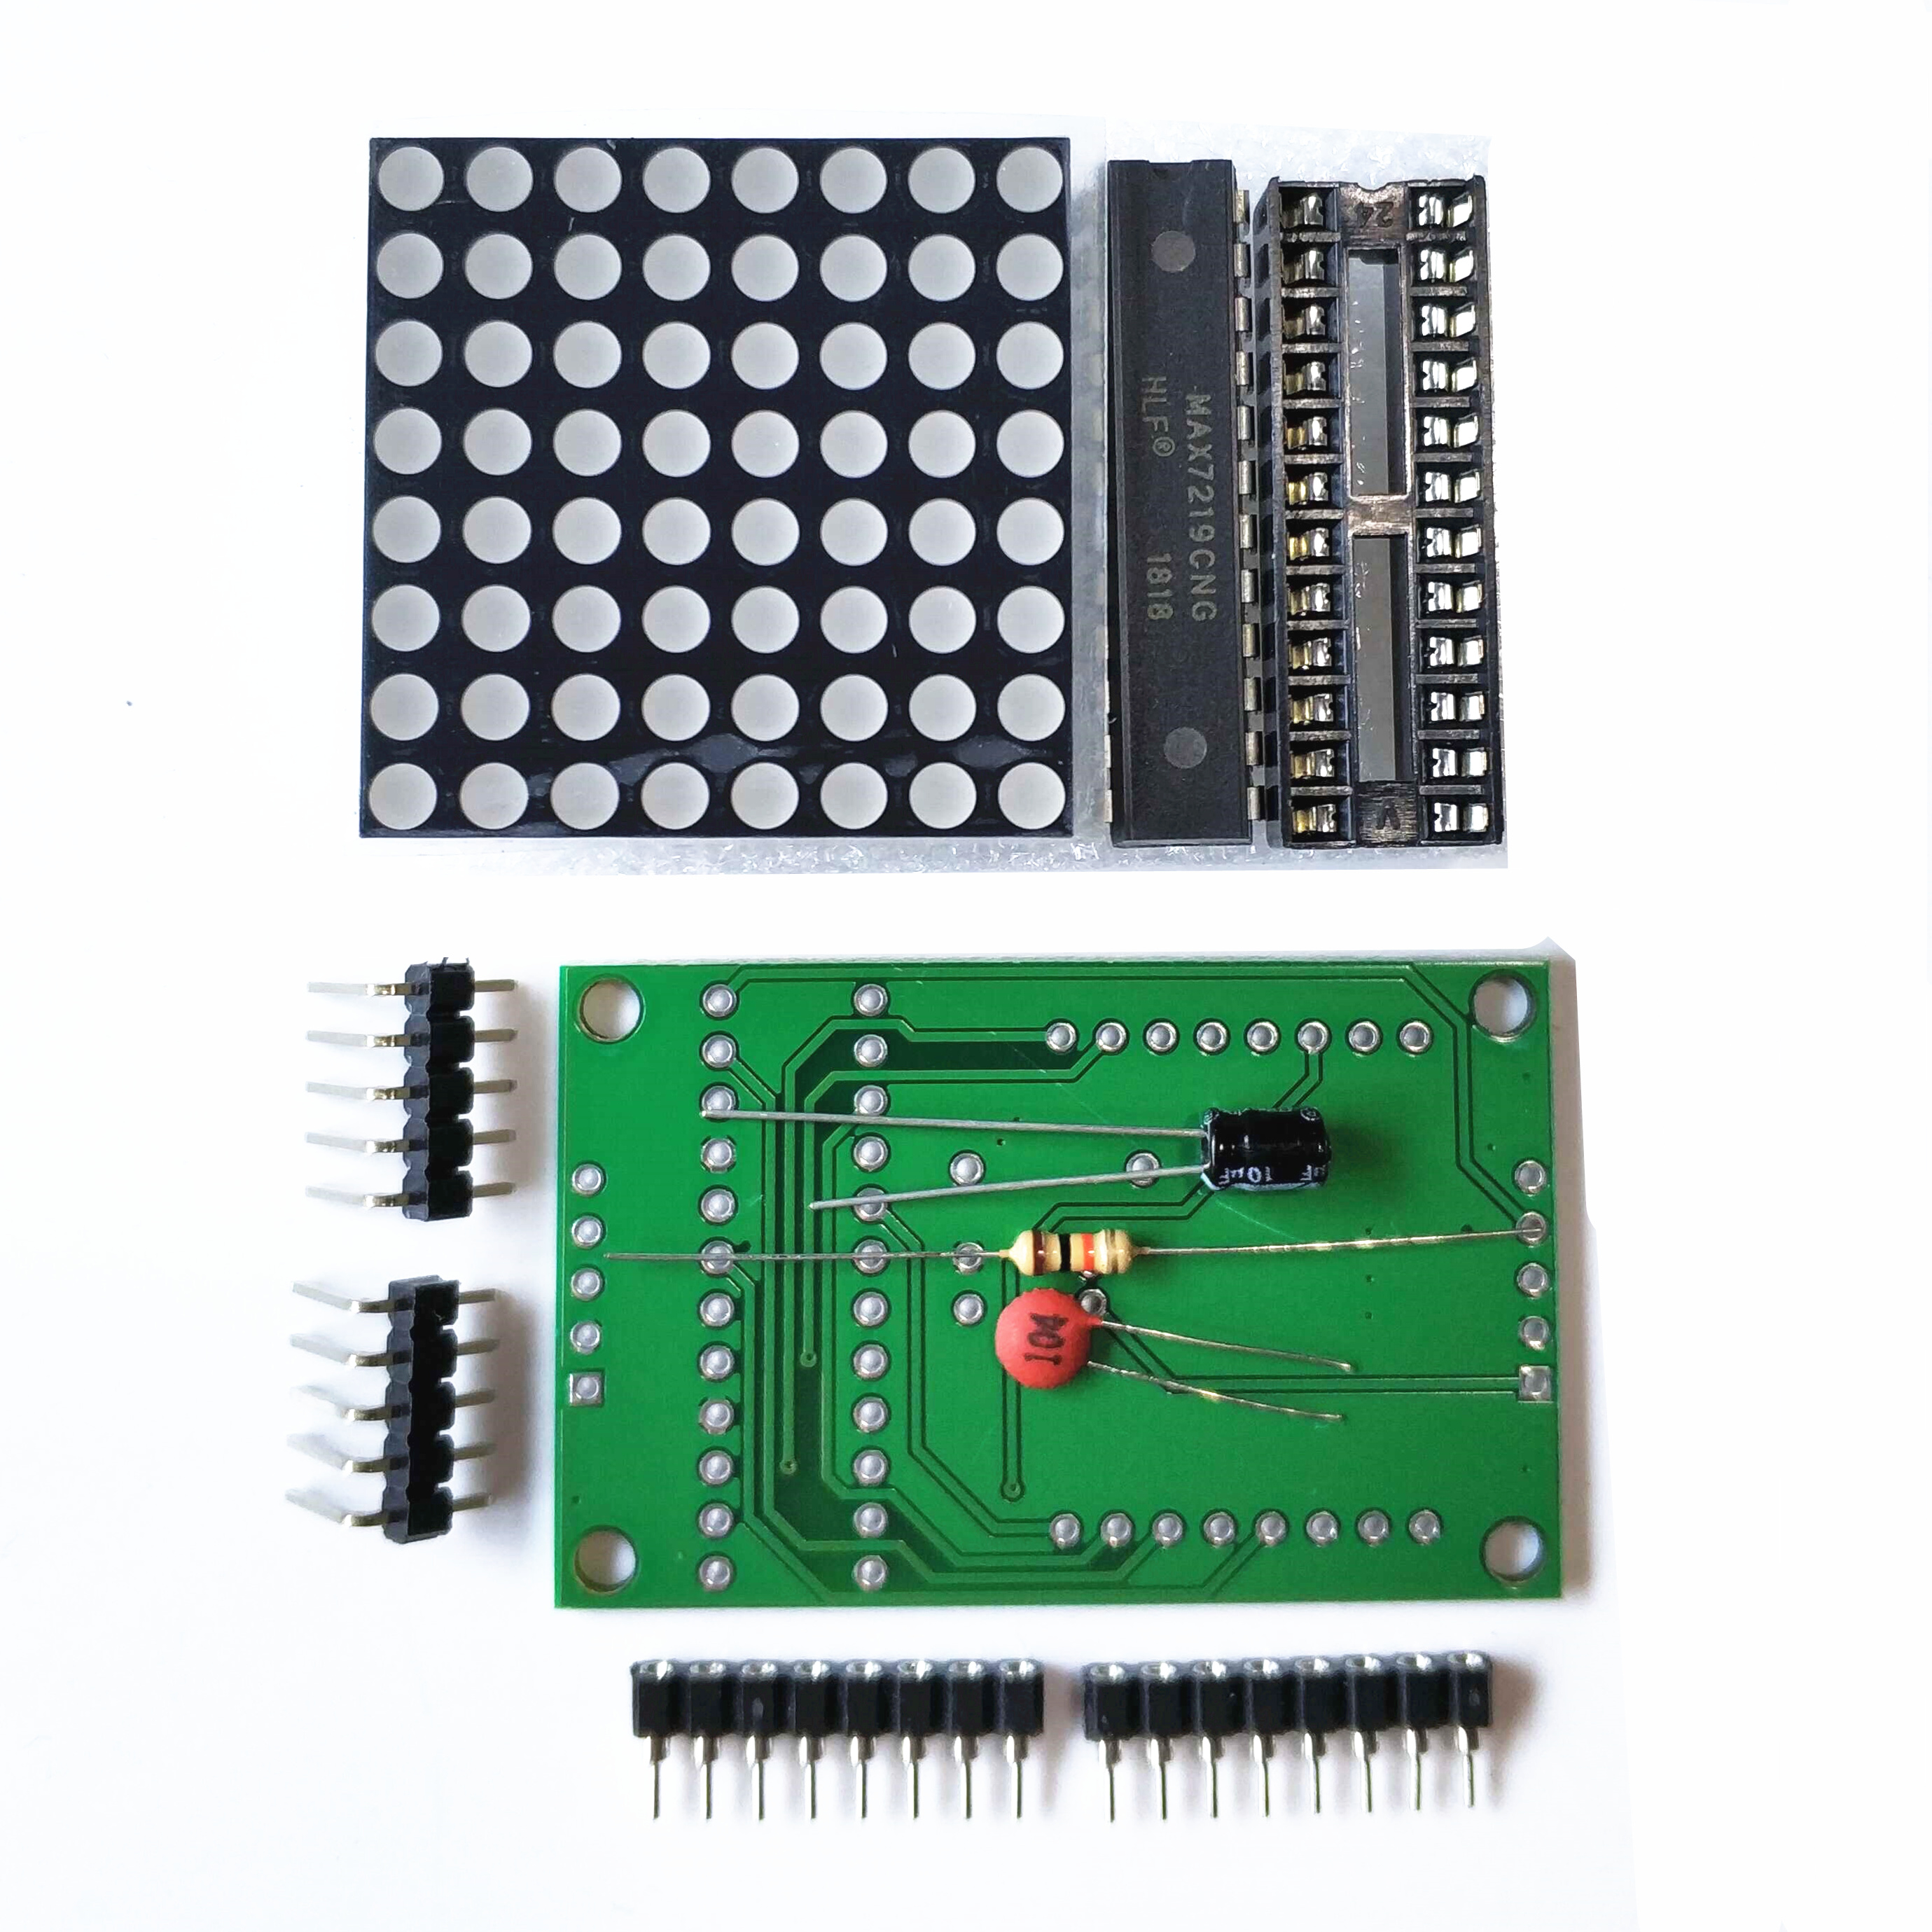 MAX7219 dot matrix display module single chip microcomputer control module DIY Kit splicing plug-in parts